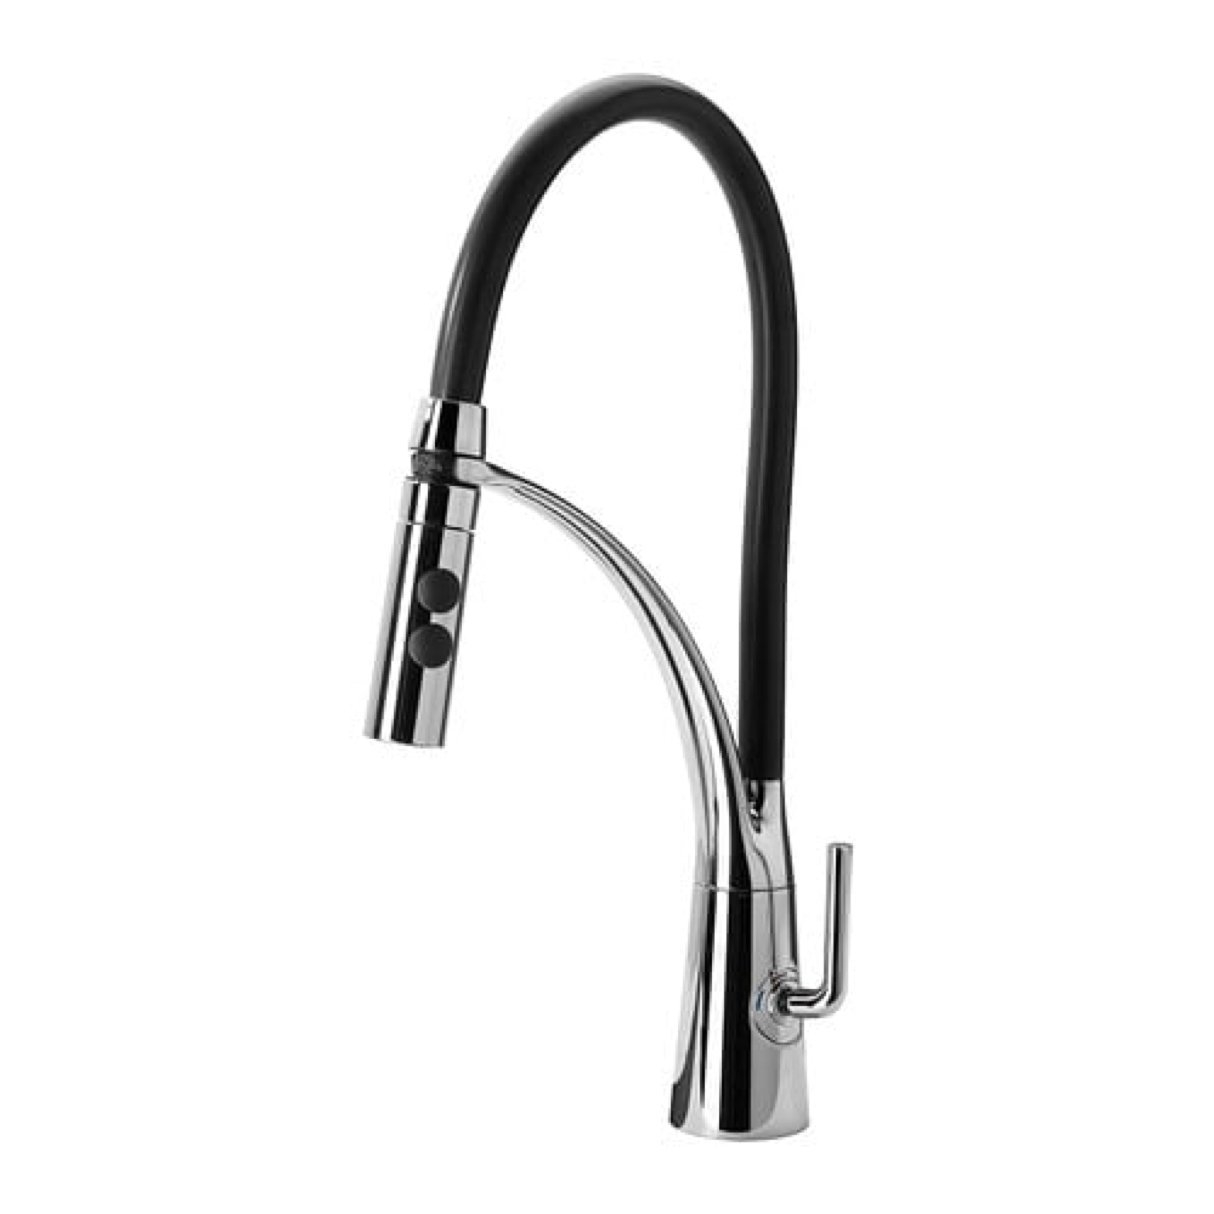 Ikea Aleskar Kitchen Faucet With Side Spray Chrome Plated Black 60257945 Ebay